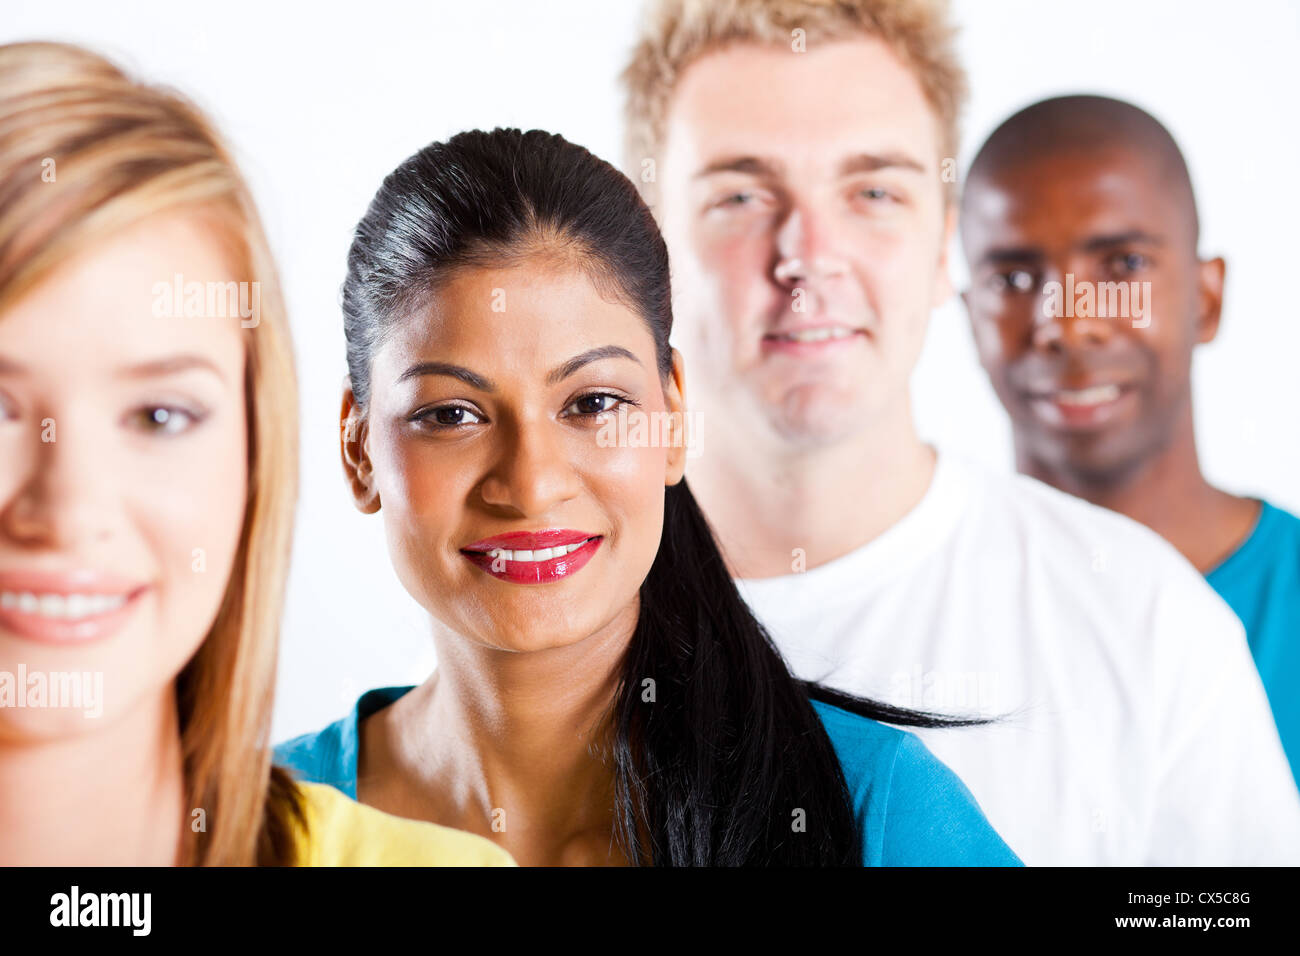 people diversity - group of diverse people closeup portrait Stock Photo